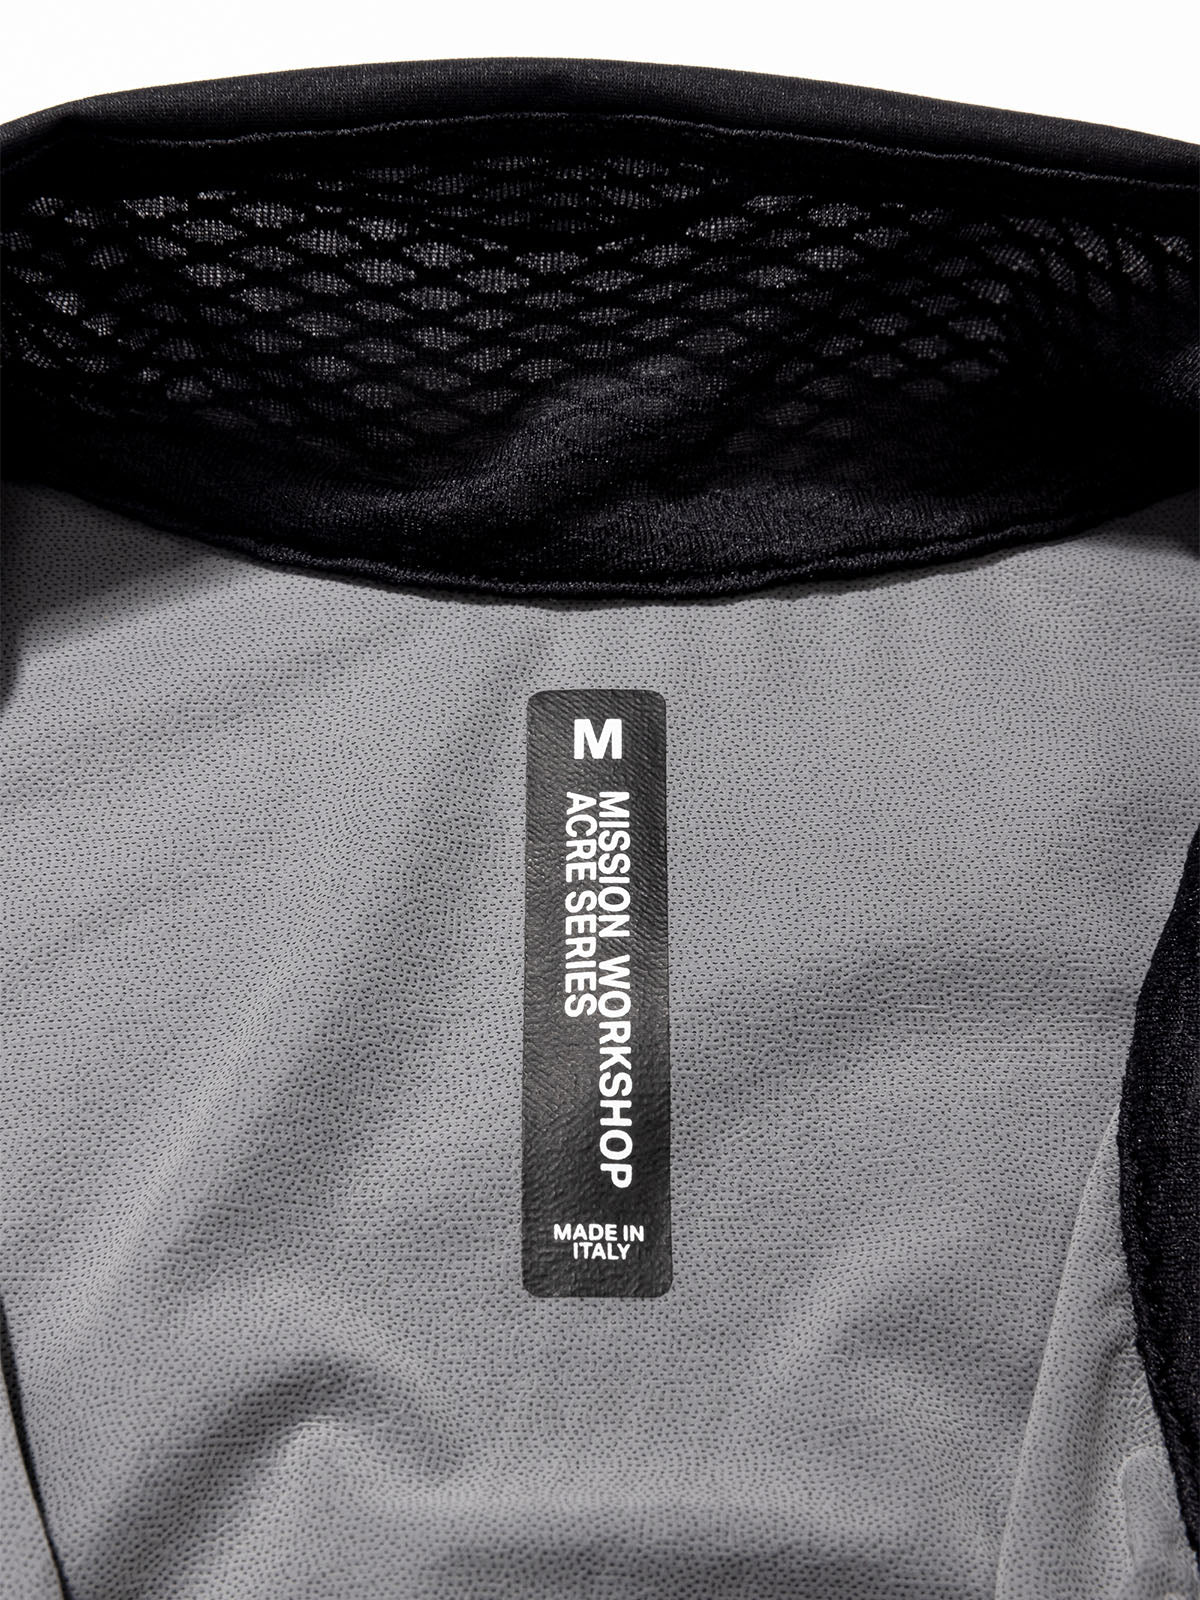 Altosphere Vest byMission Workshop - 耐候性バッグ＆テクニカルアパレル - サンフランシスコ＆ロサンゼルス - 耐久性に優れた作り - 永久保証